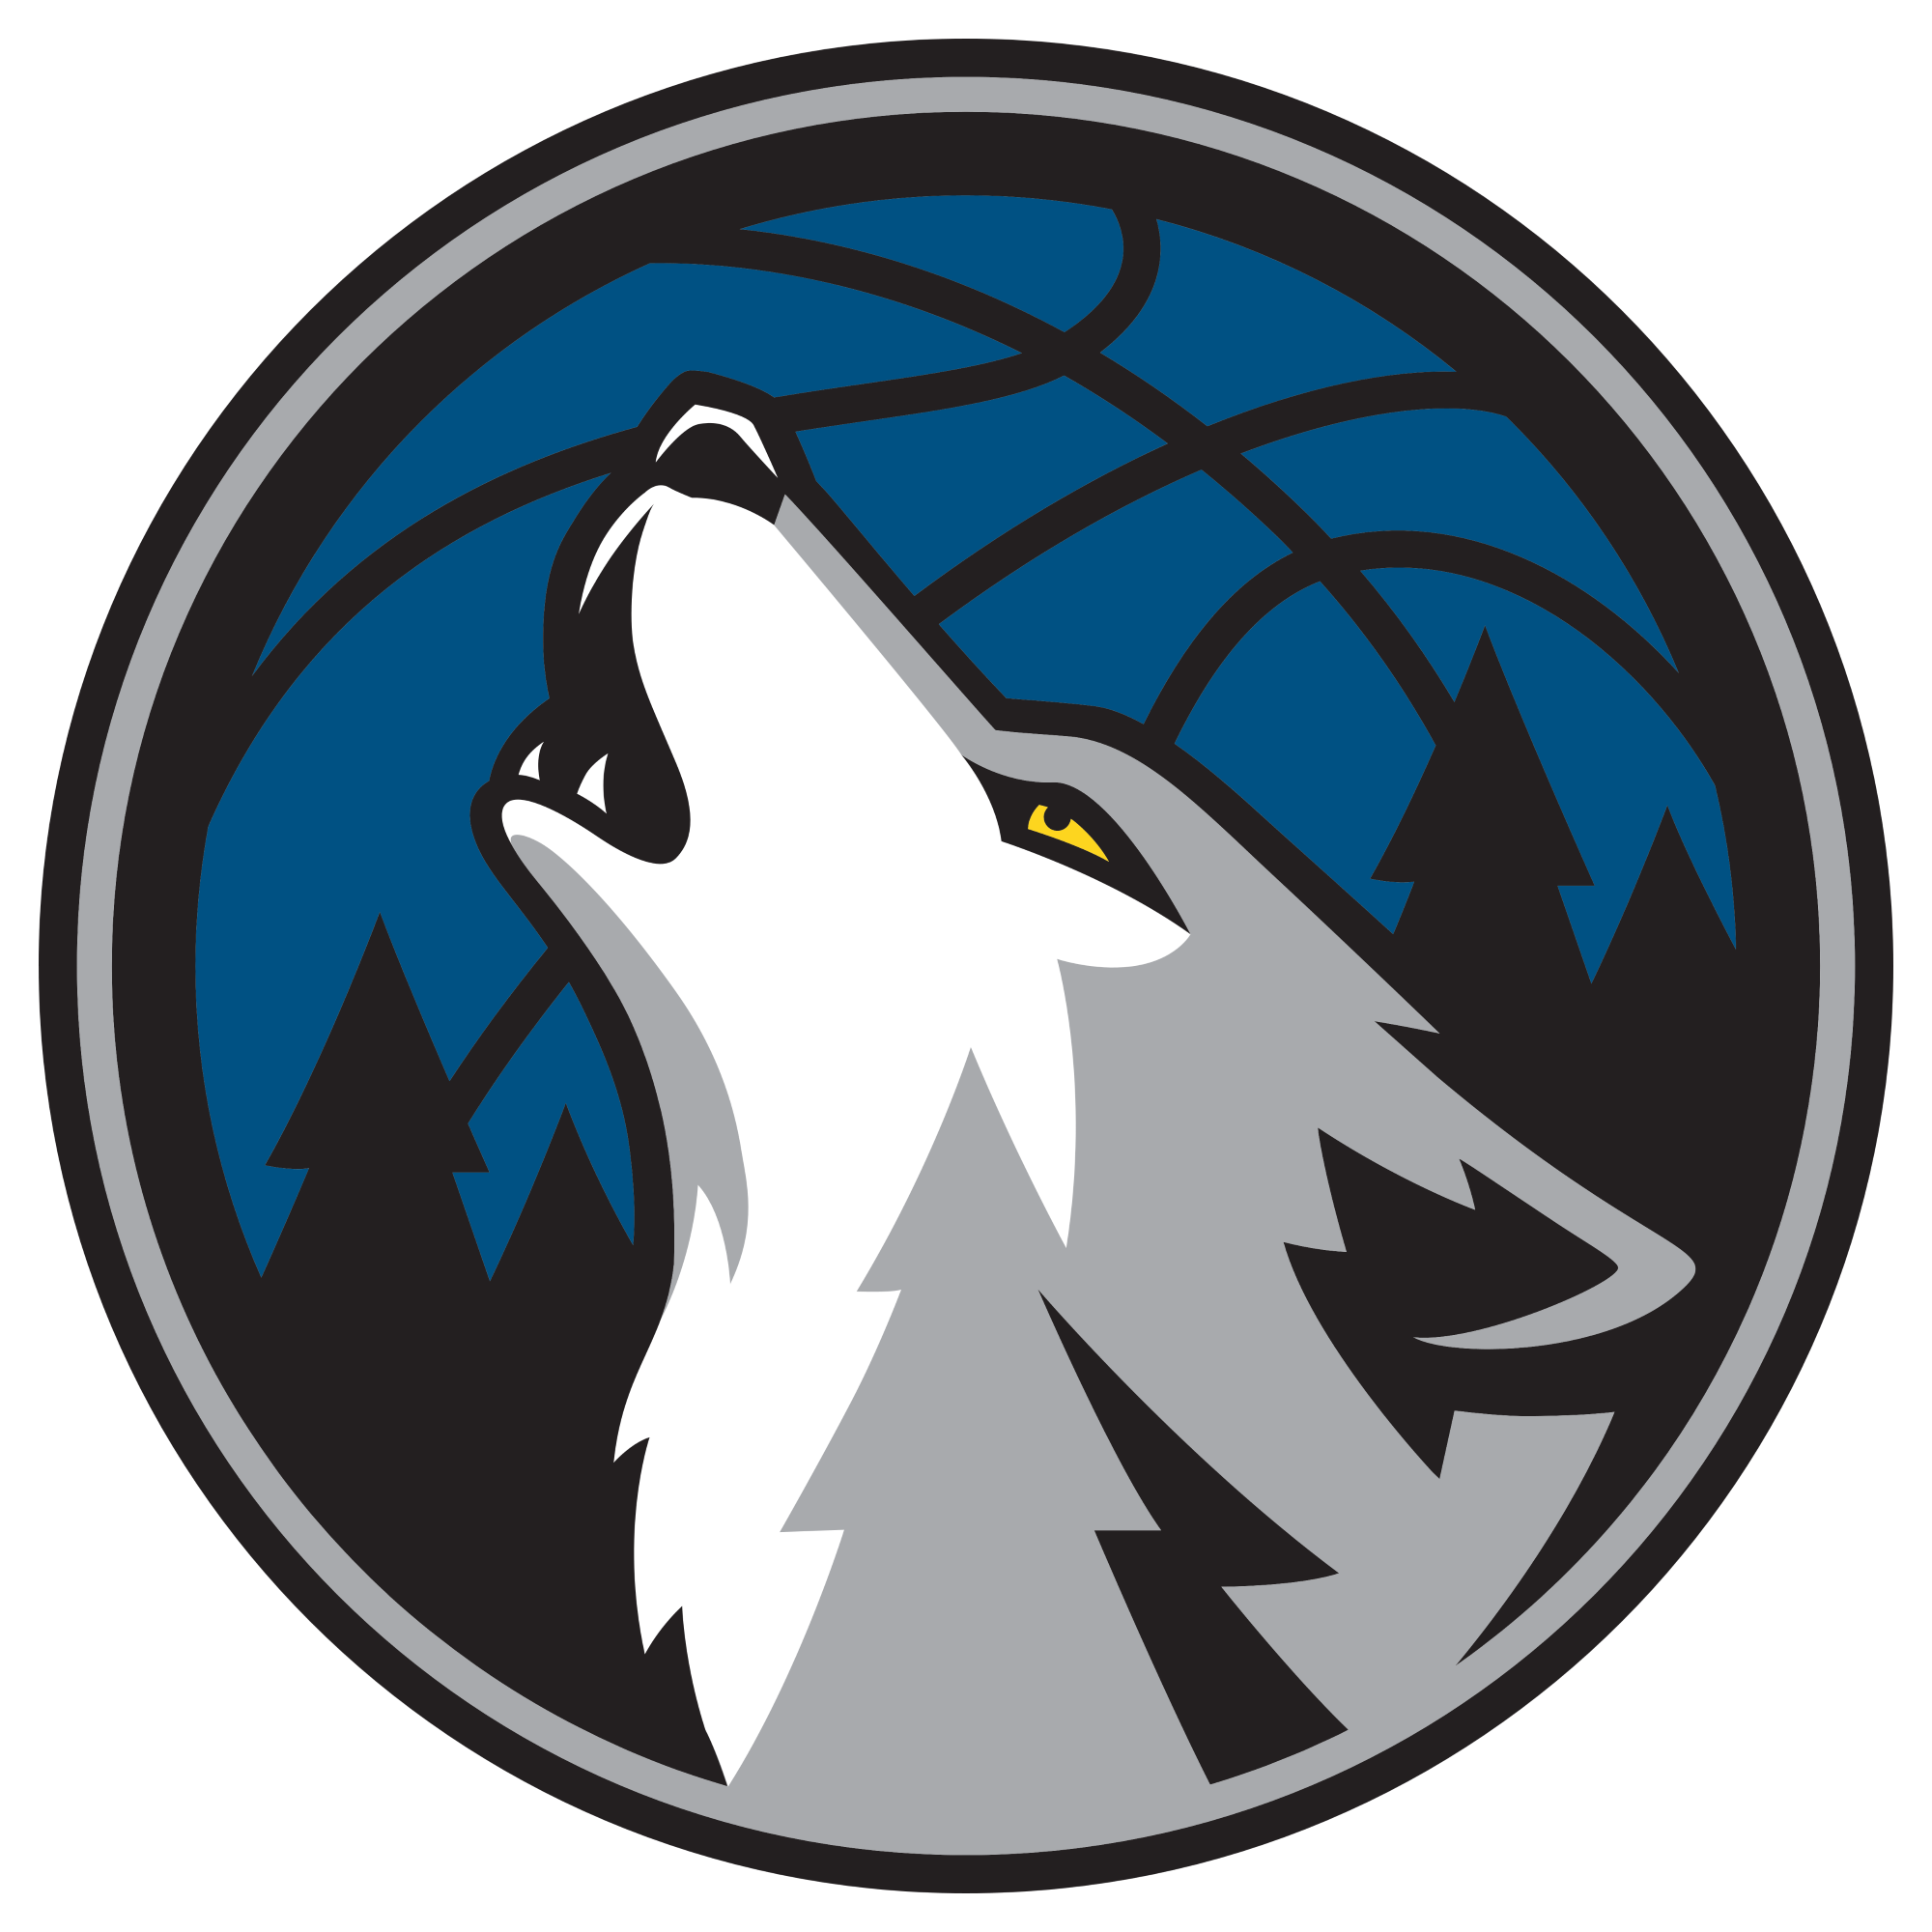 Minnesota timberwolves logo p